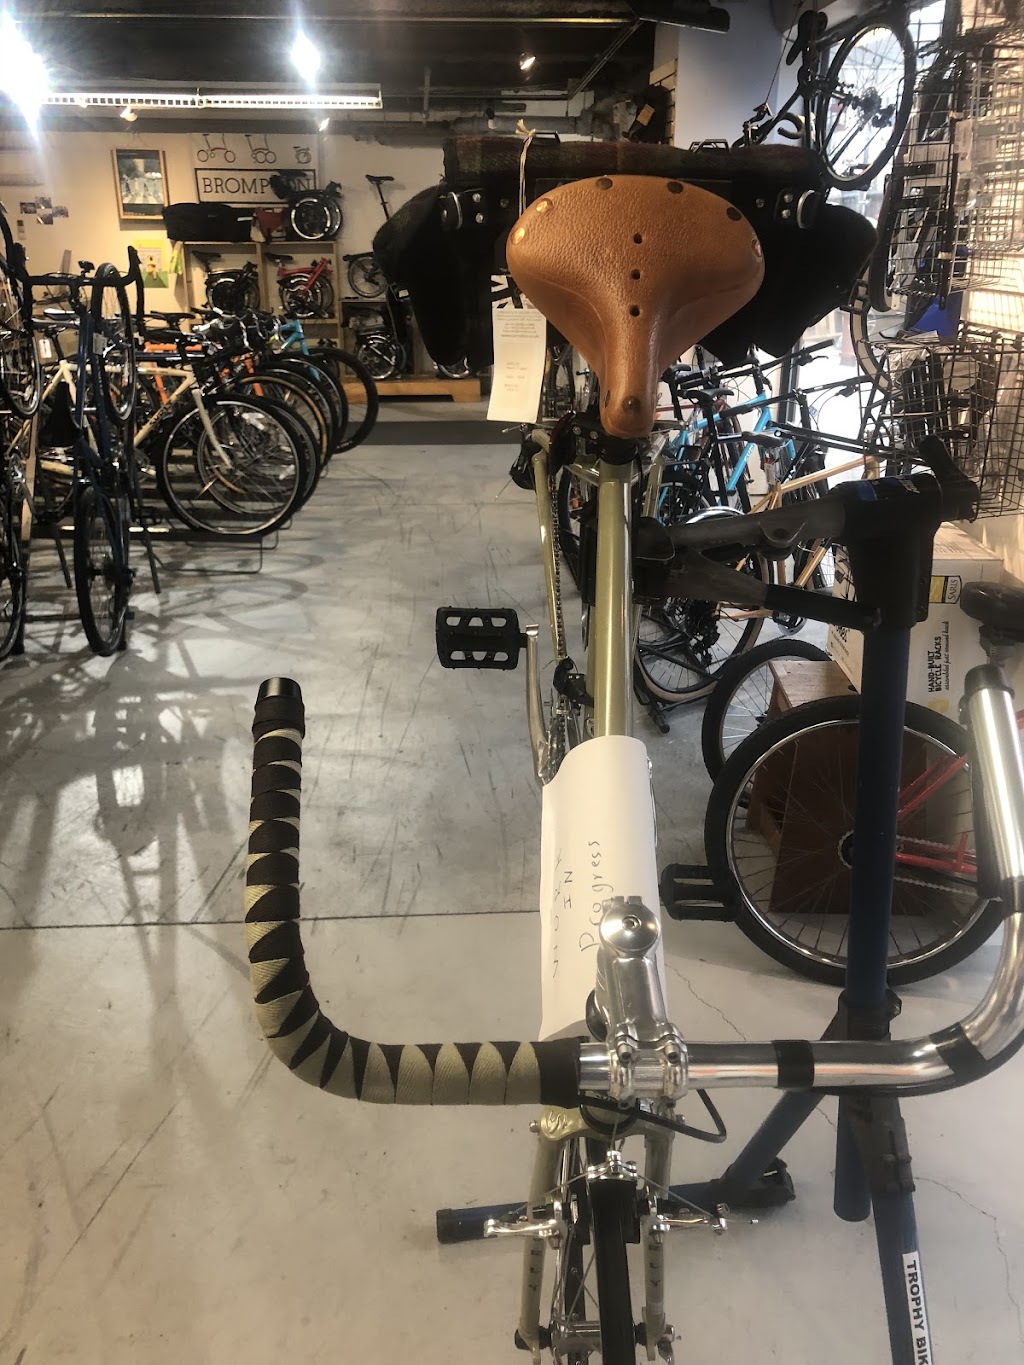 Trophy Bikes | 133 S 23rd St, Philadelphia, PA 19103 | Phone: (215) 592-1234